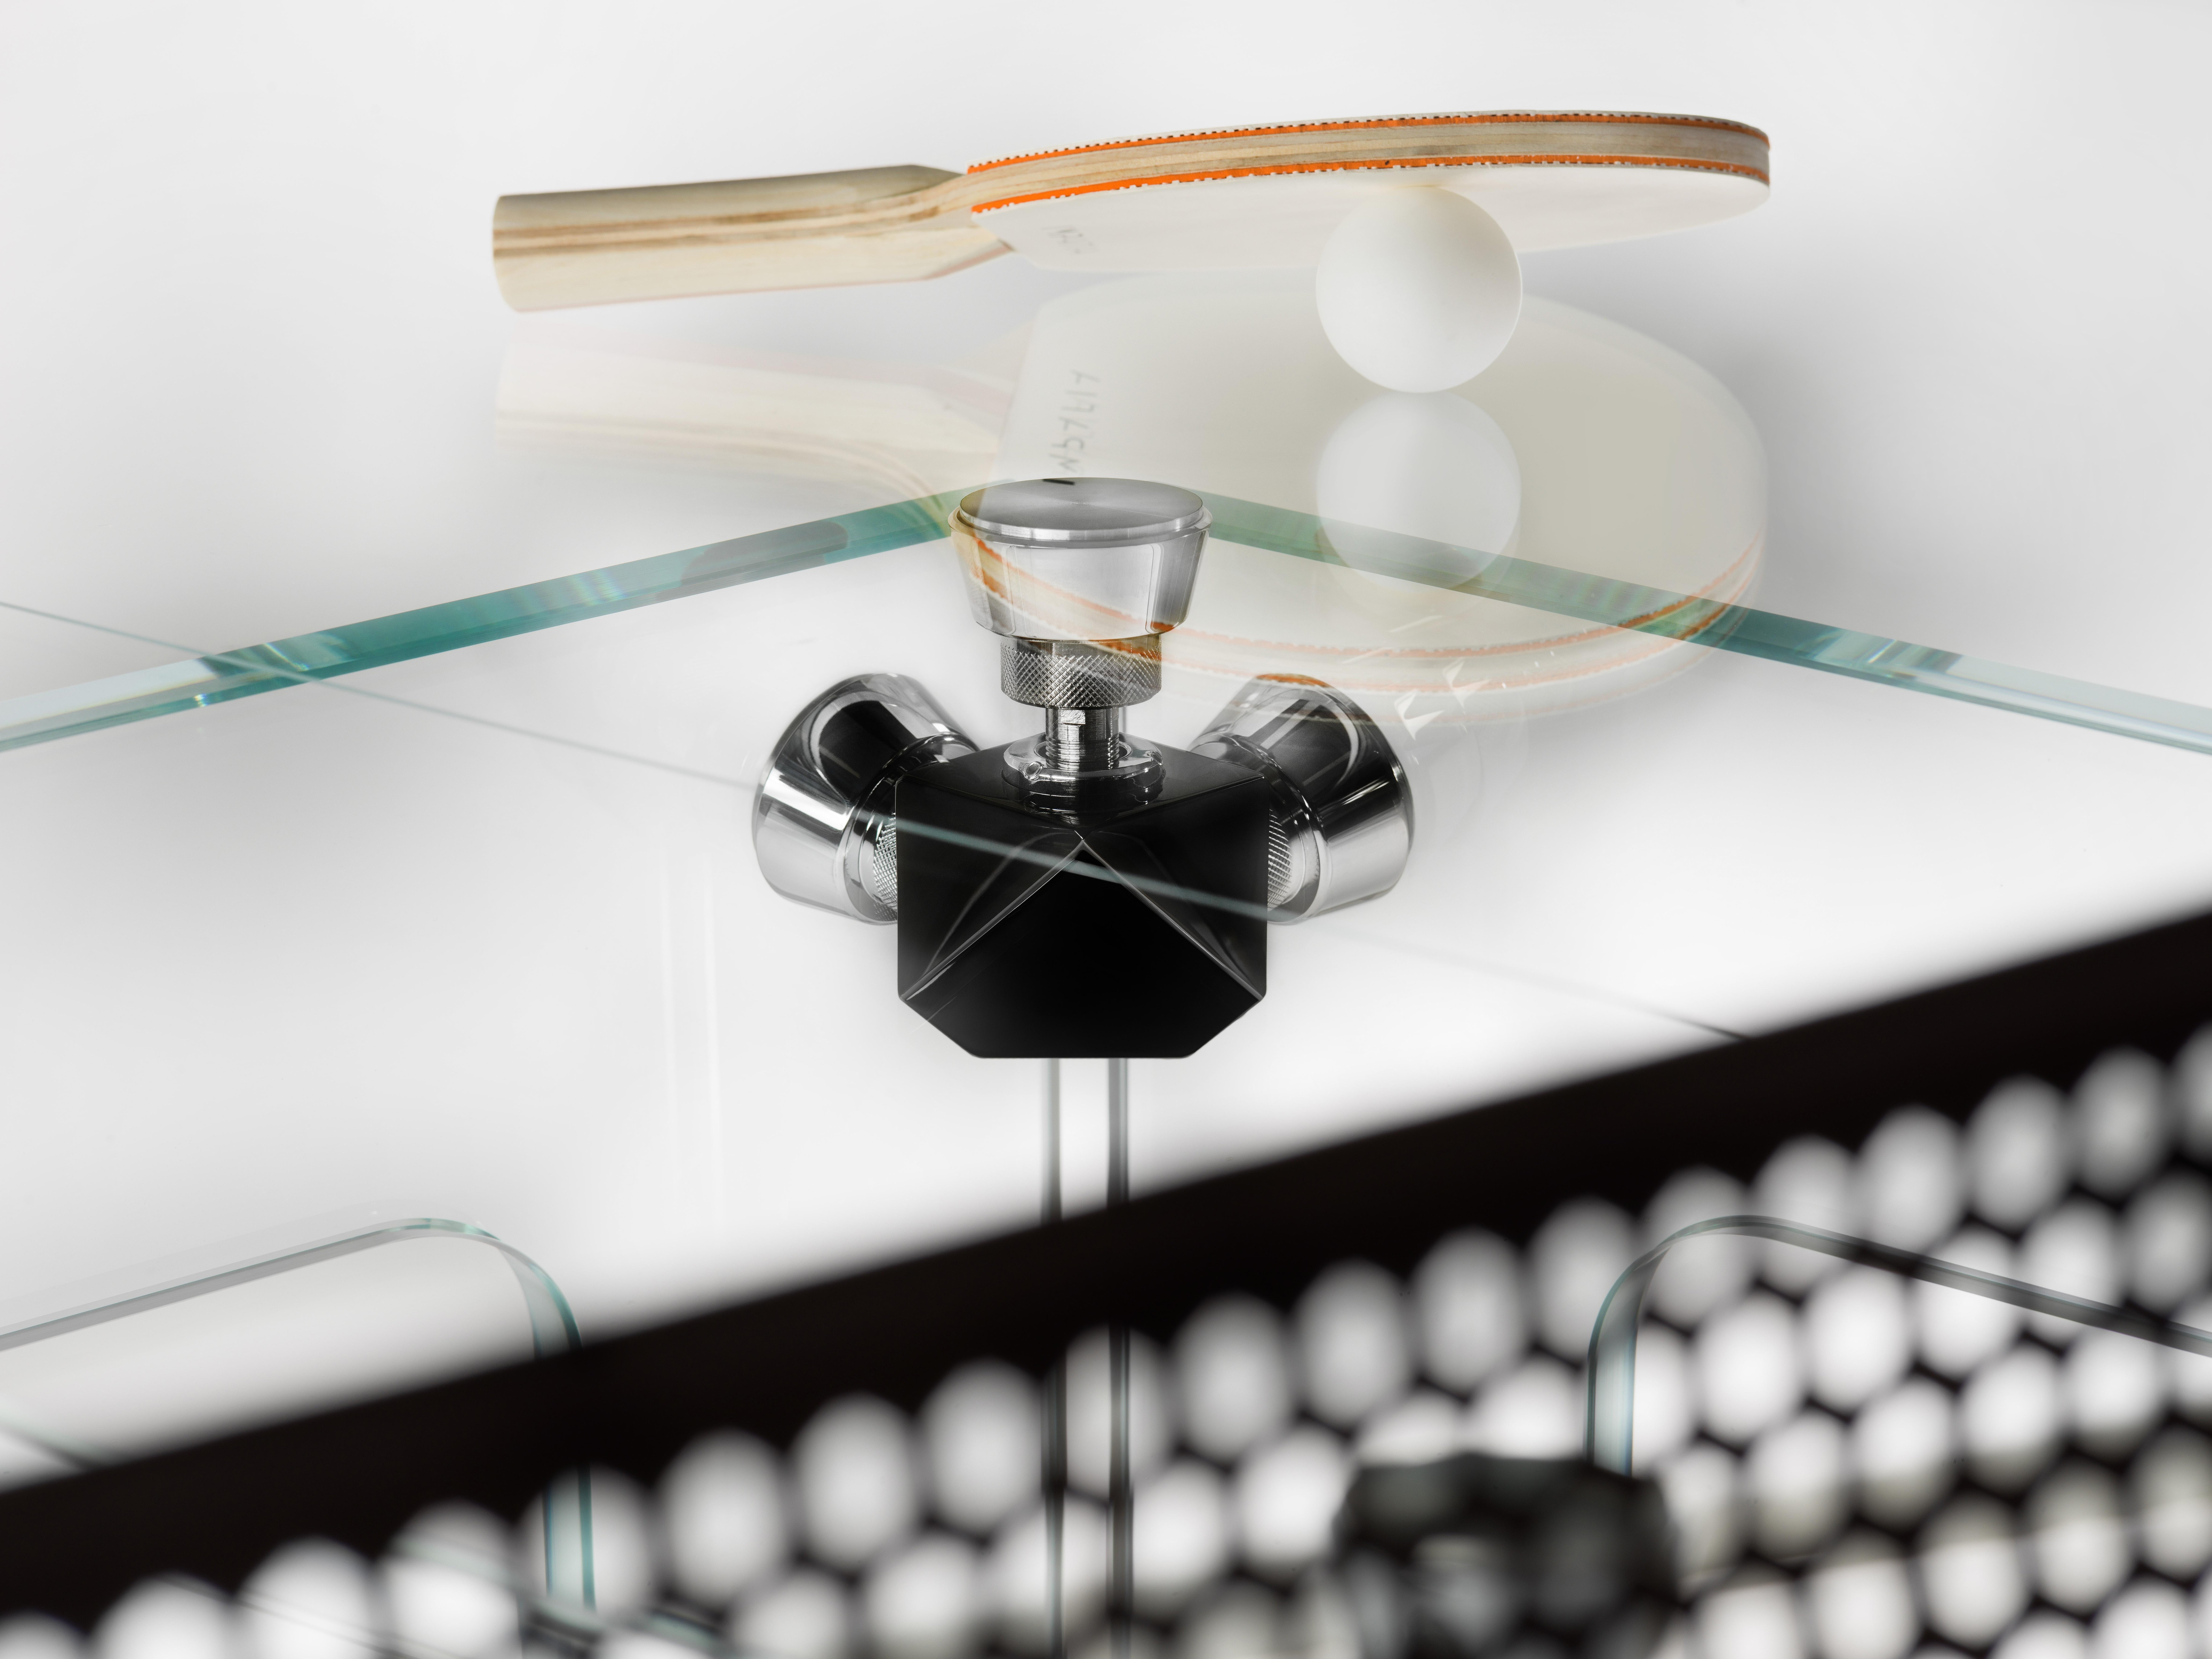 Daim Table de ping-pong en verre design avec composants en nickel noir par Impatia en vente